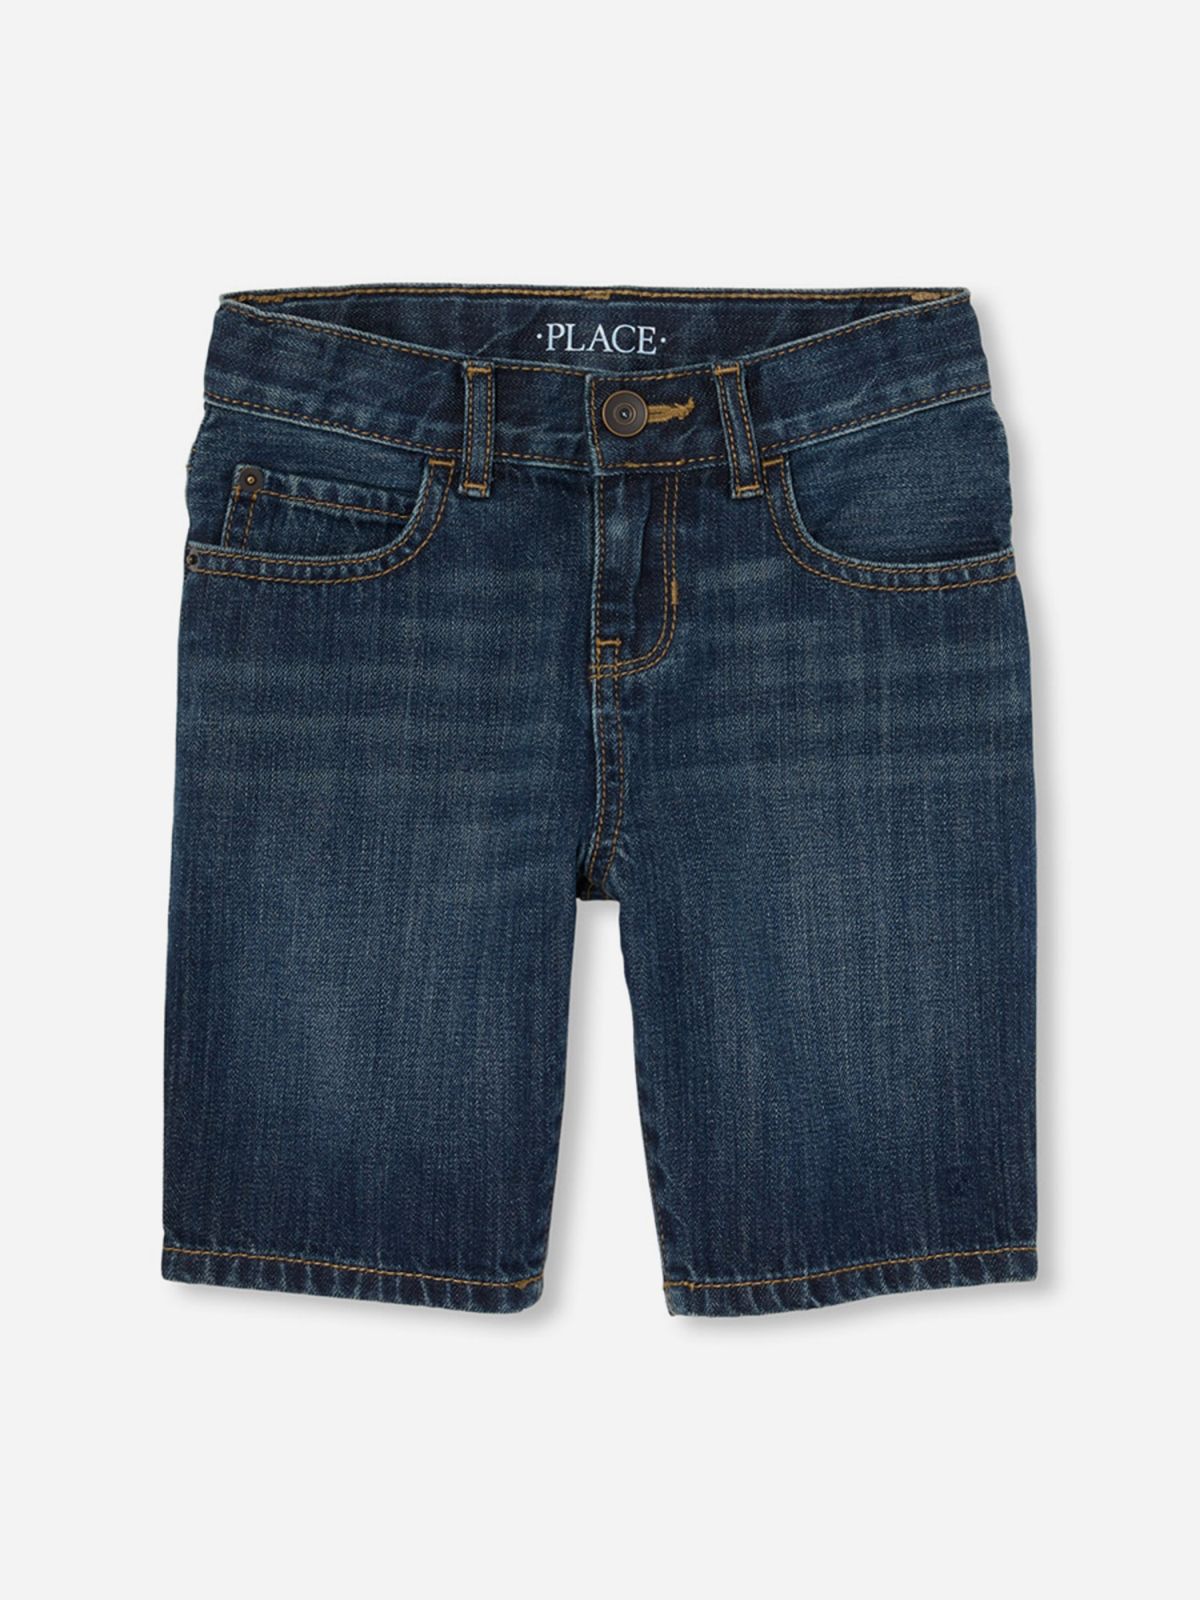  ג'ינס קצר בשטיפה כהה / בנים של THE CHILDREN'S PLACE 